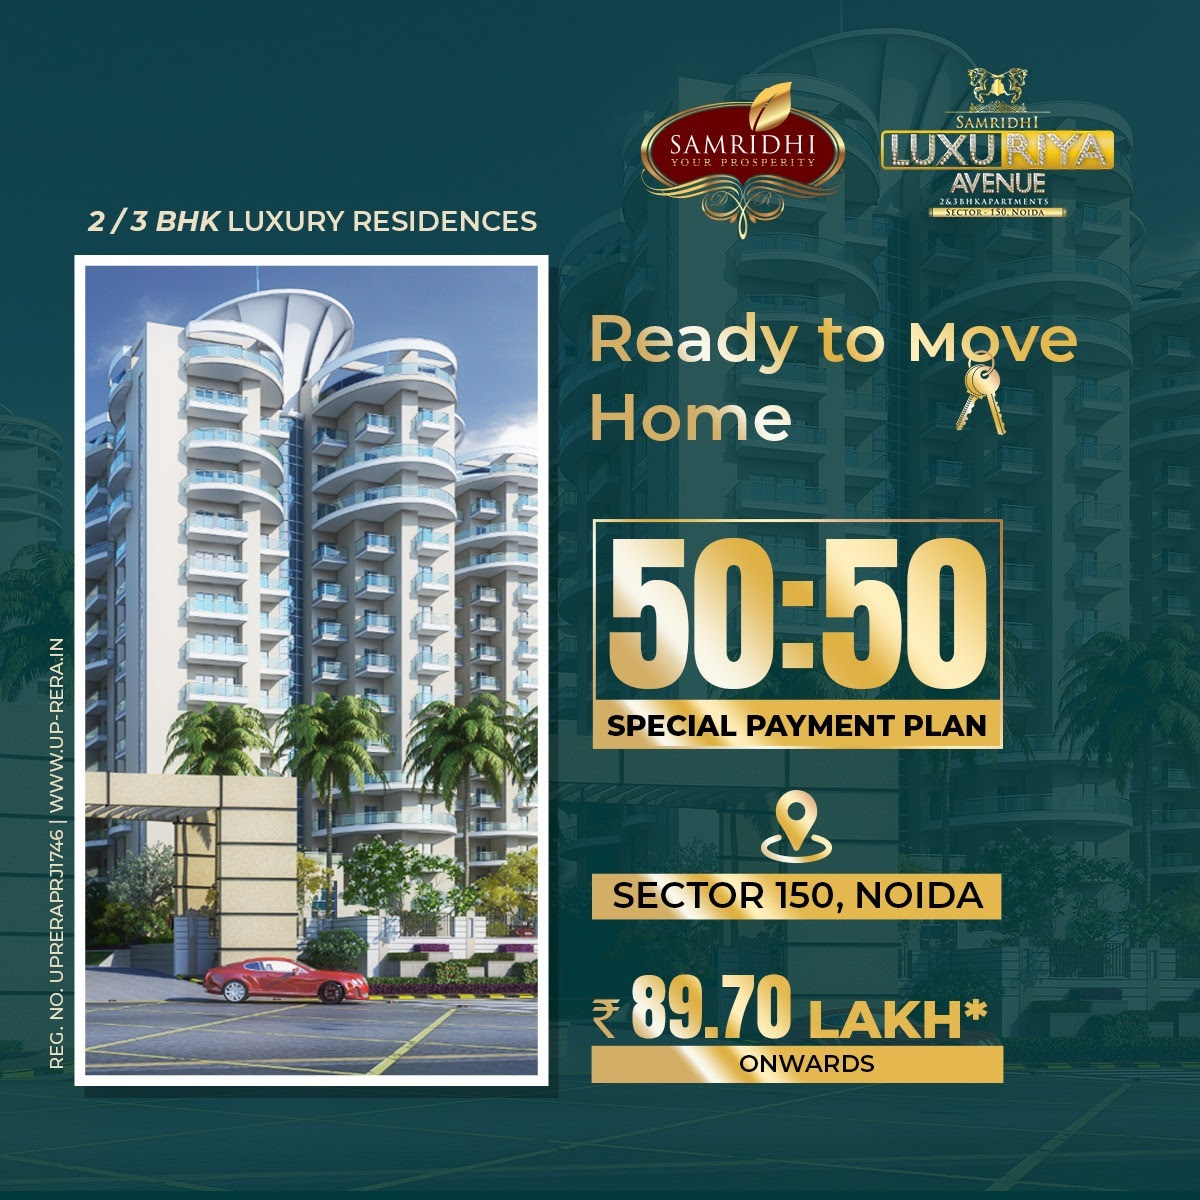 Book 2 & 3 BHK luxury residences Rs 89.70 Lac onwards at Samridhi Luxuriya Avenue, Noida Update